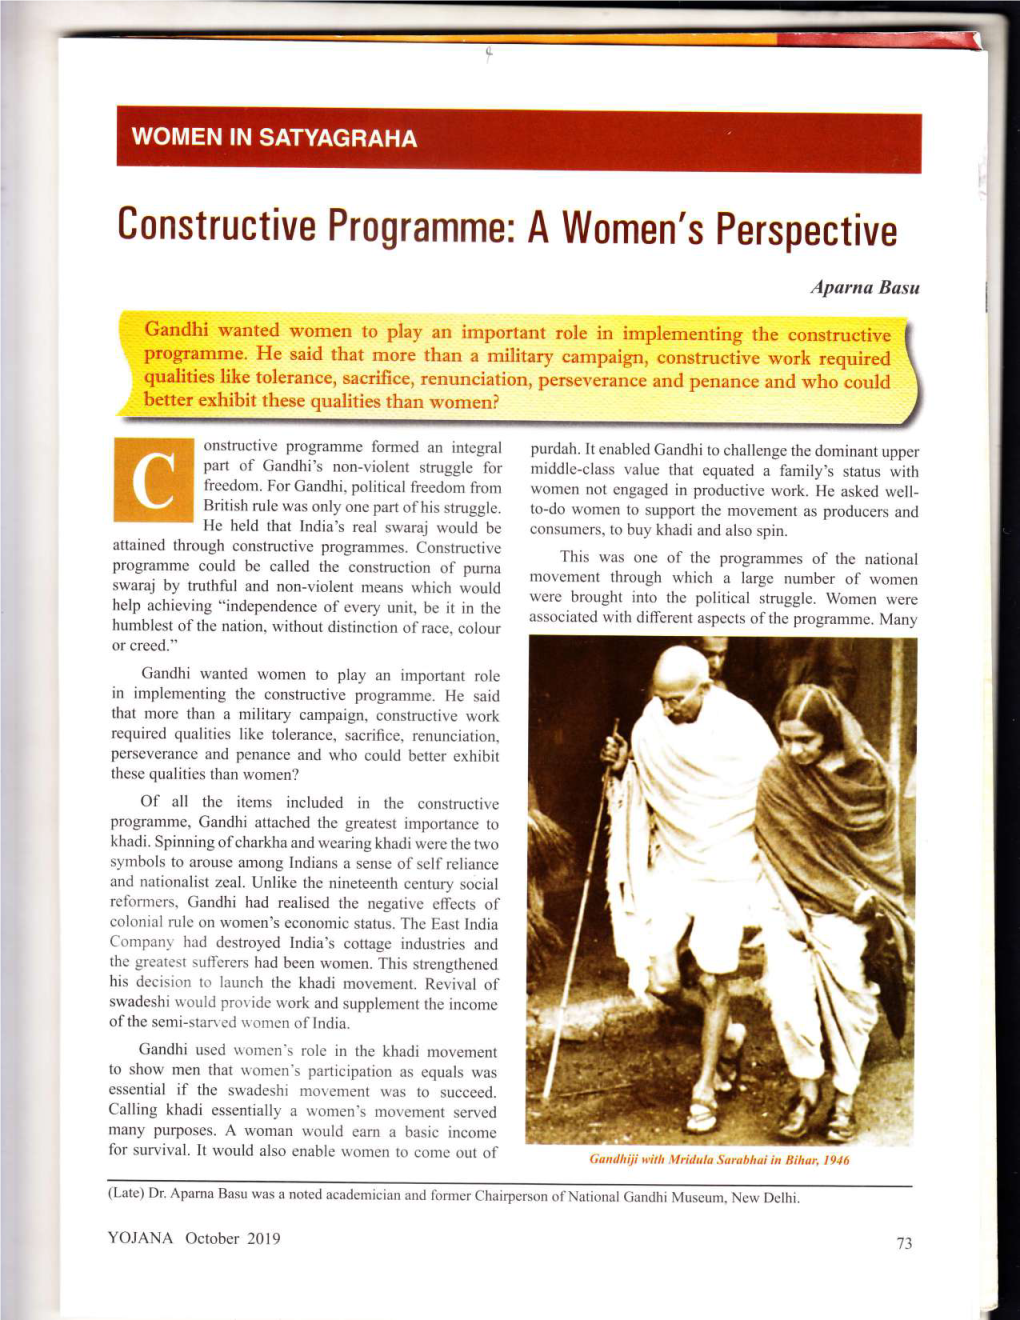 Constructive Programme: a Women's Perspective